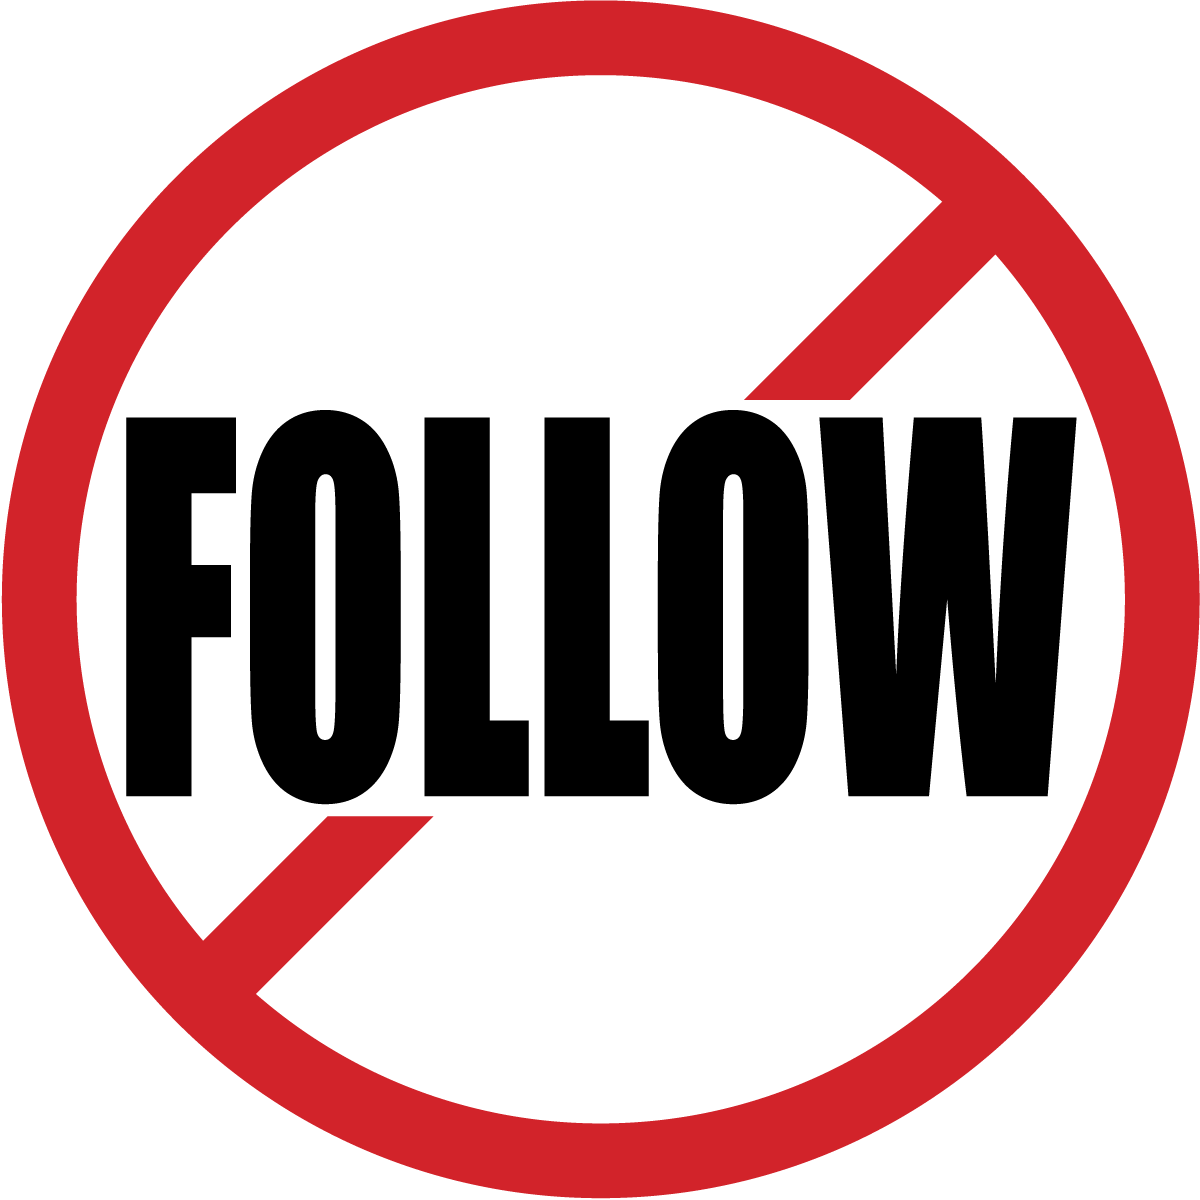 No follow.